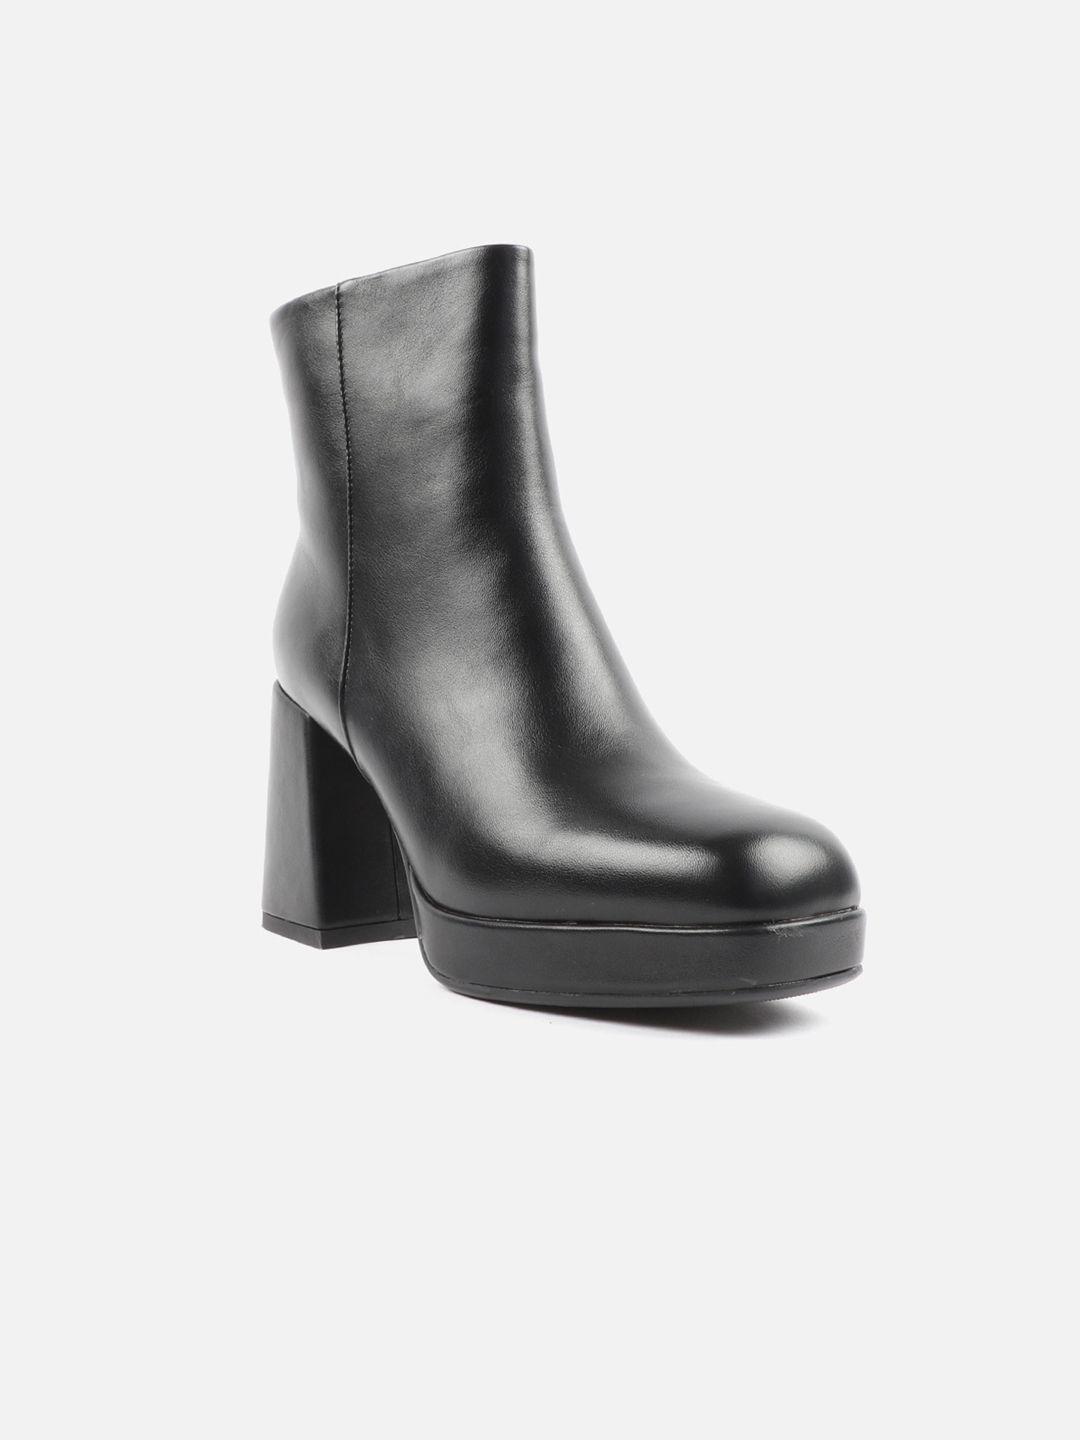 carlton london women black mid top block heeled boots